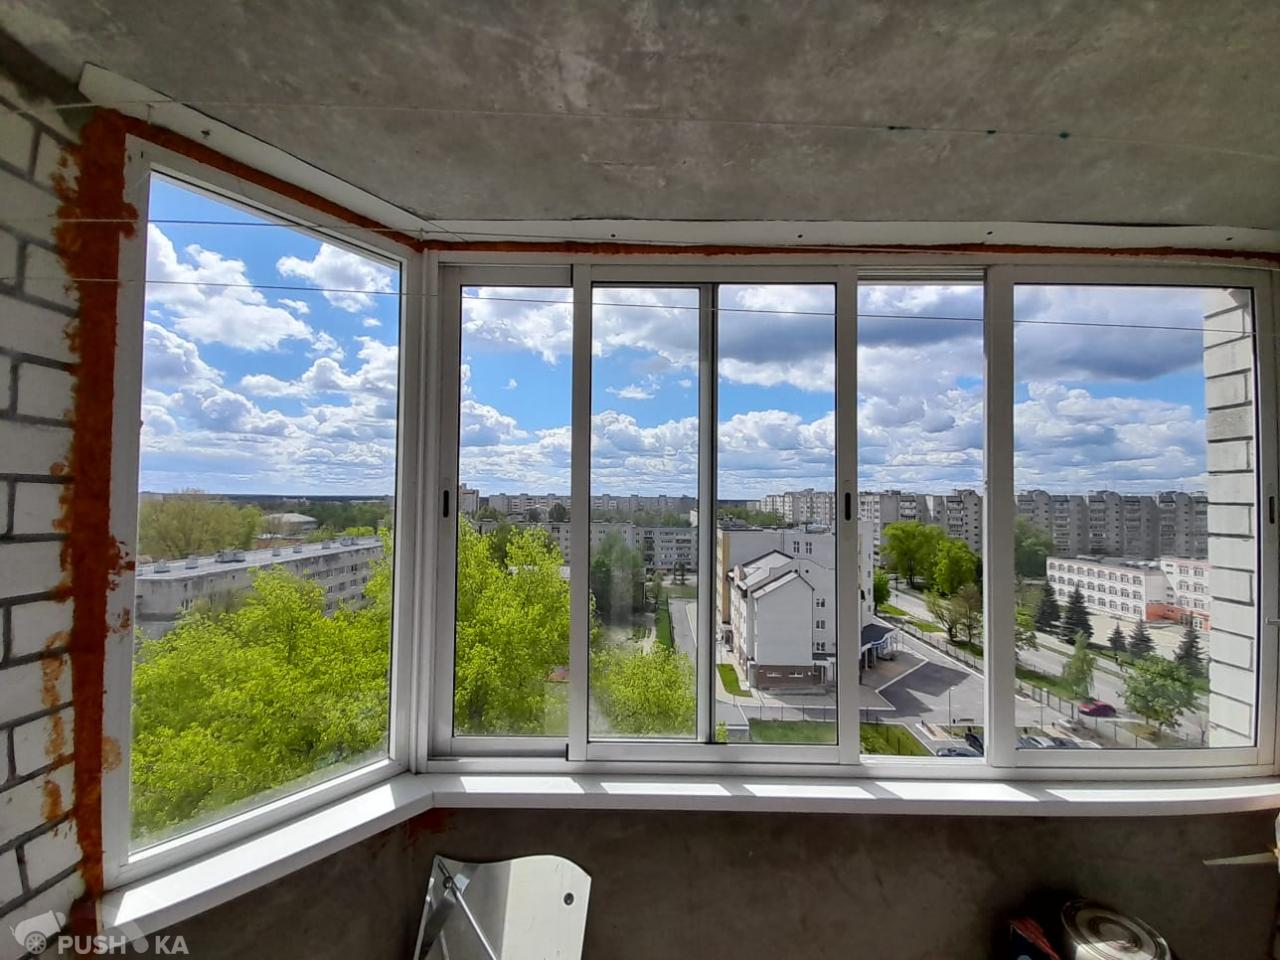 Продаётся 1-комнатная квартира 43.0 кв.м. этаж 10/10 за 2 850 000 руб 